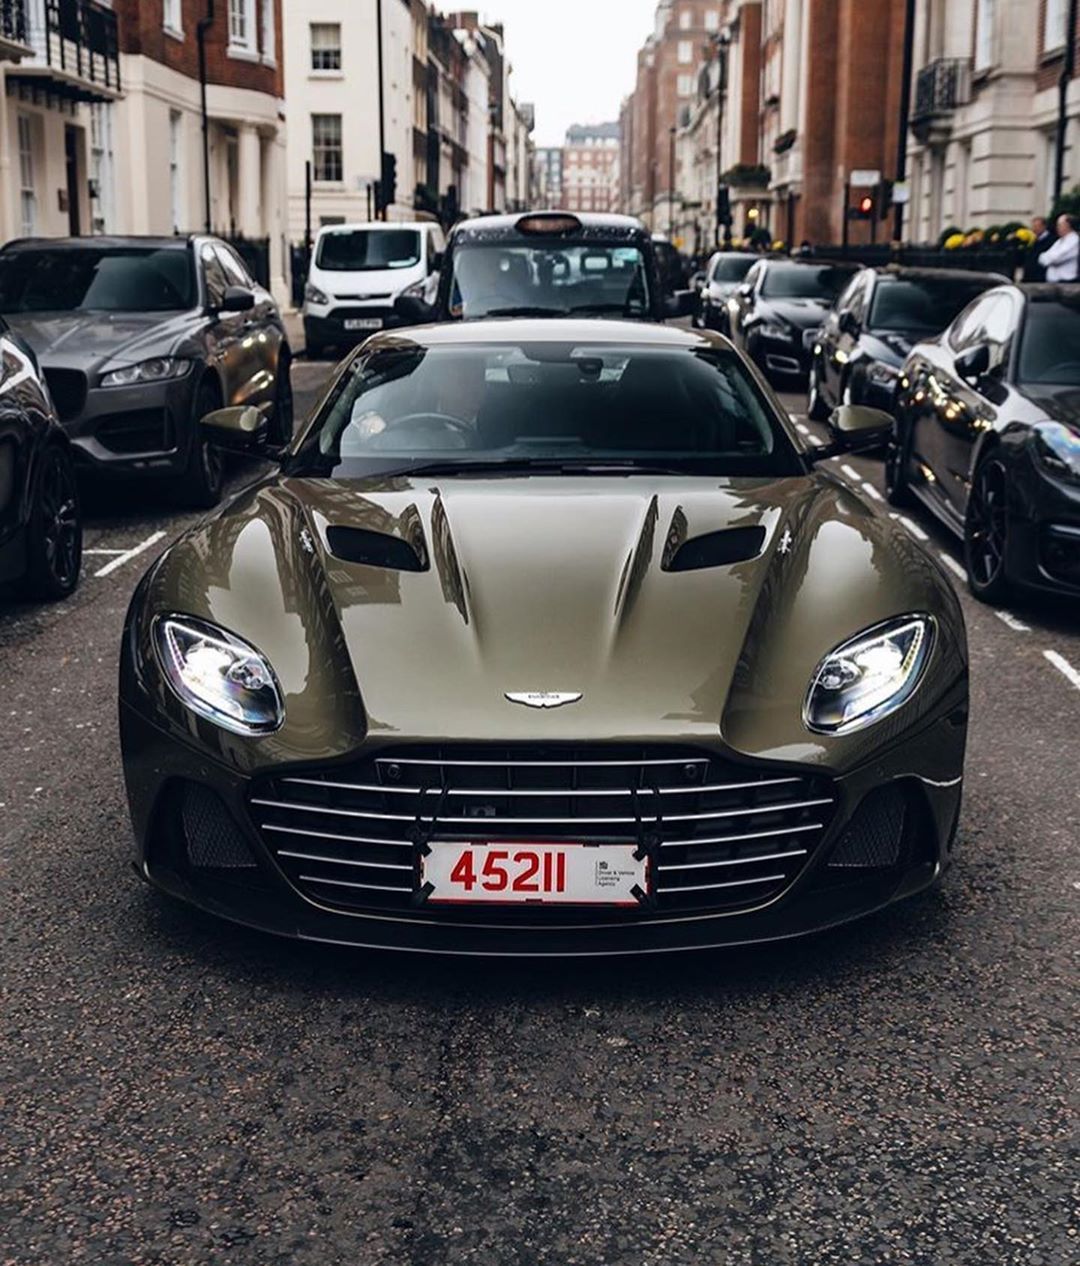 Aston Martin on Instagram: “Amazing shots by @tfjj of this Aston Martin DBS OHMSS Edition  #astonmartin #dbssuperleggera #ohmssedition #ohmss #british #astonmartindbs…”